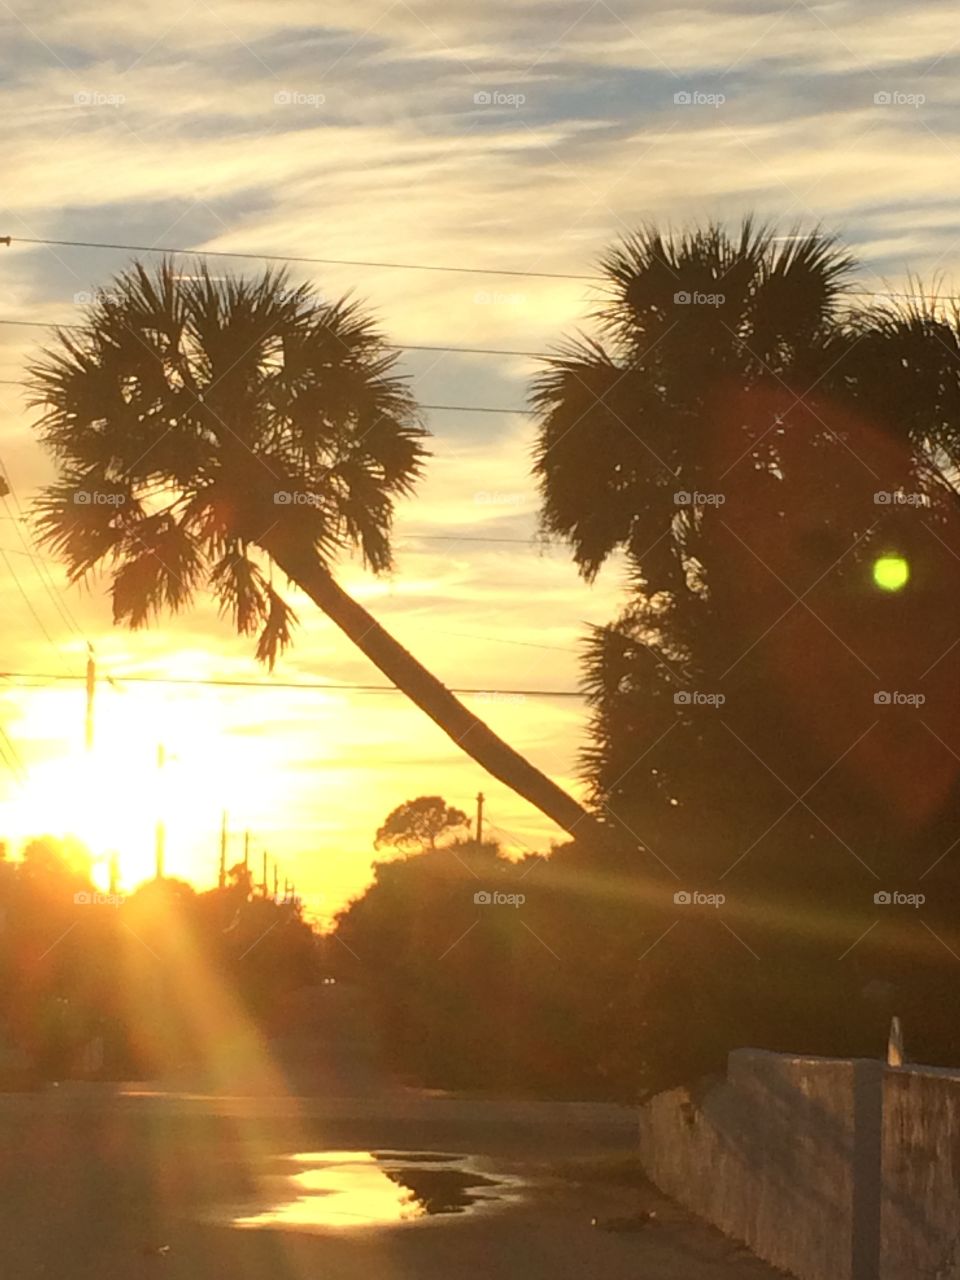 Daytona Beach sunset. Captured walking back from the beach. 